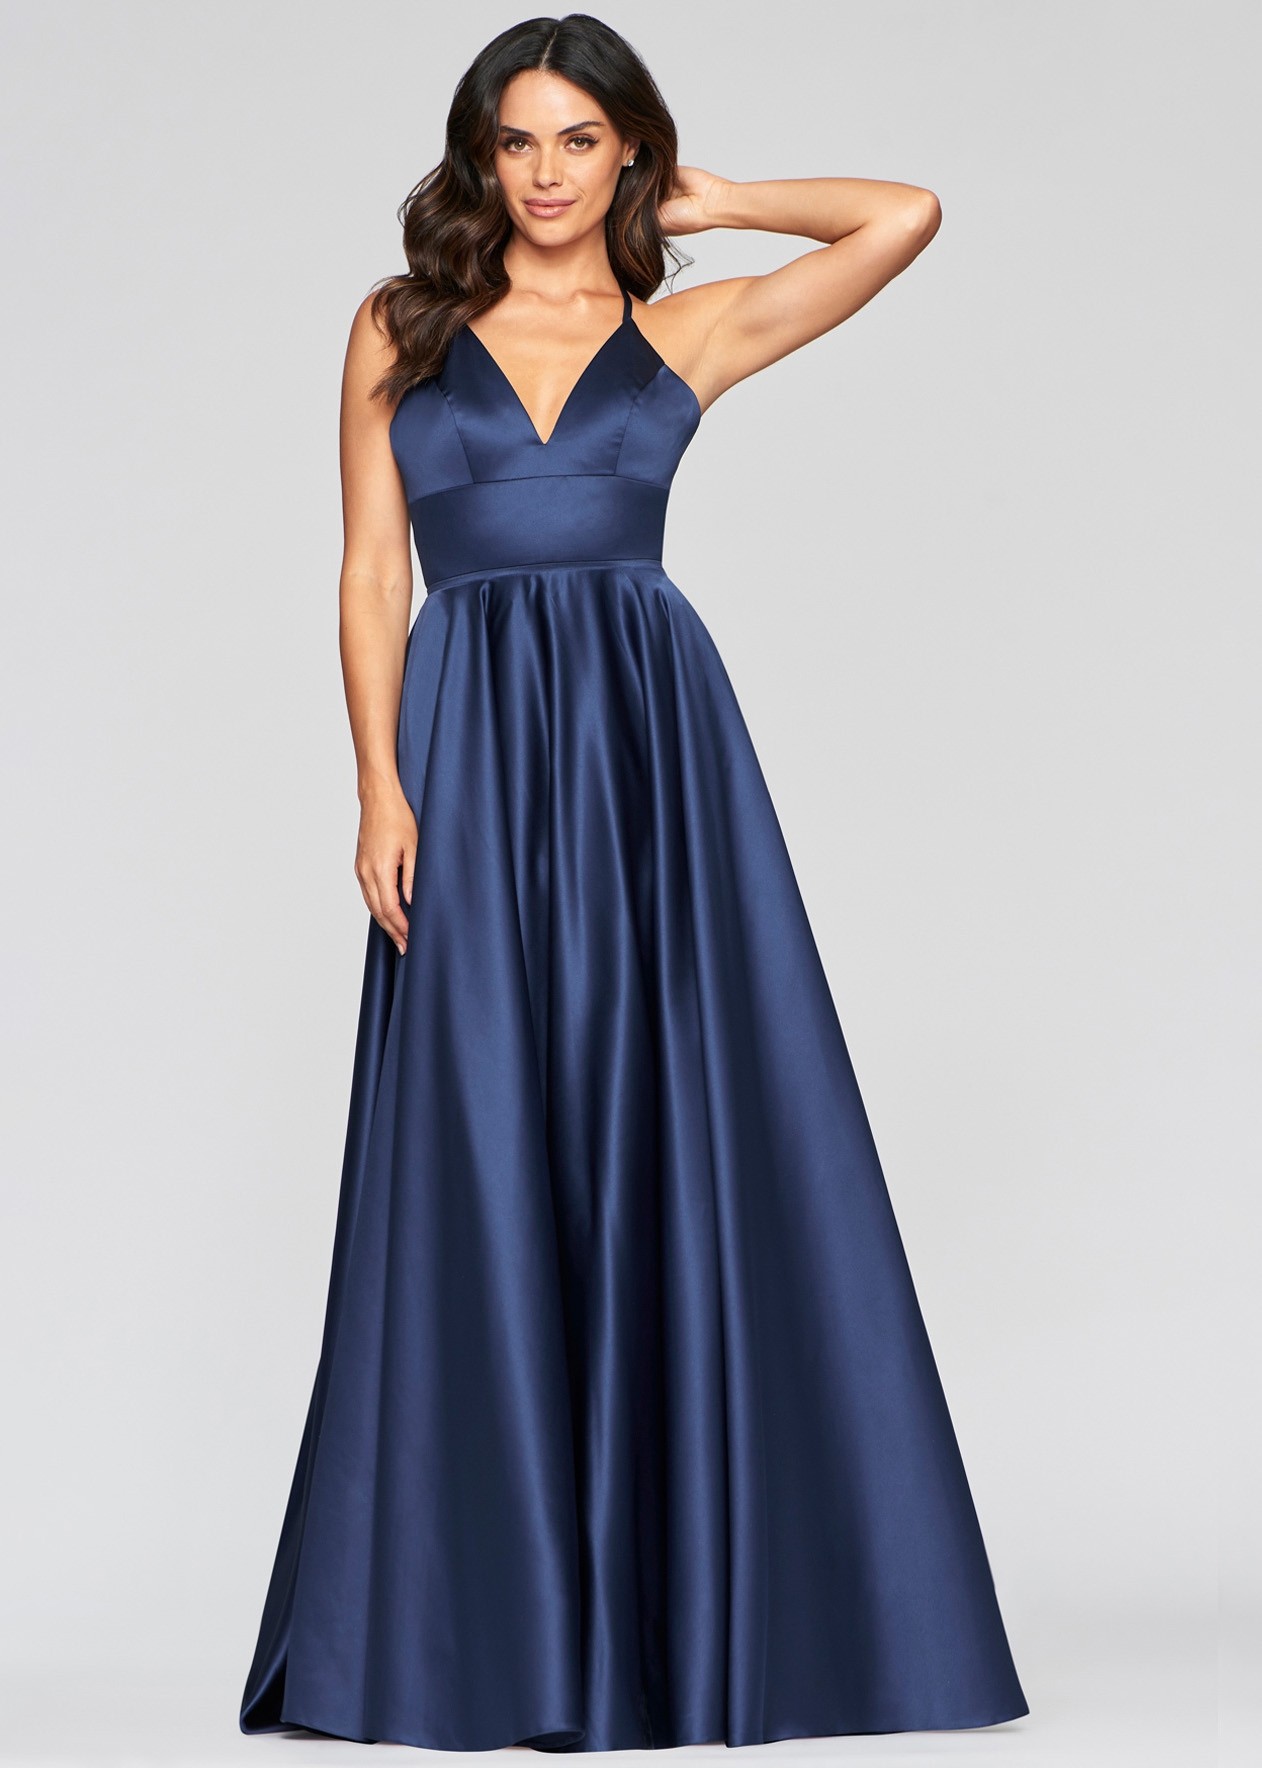 Faviana S10252 Prom Dress